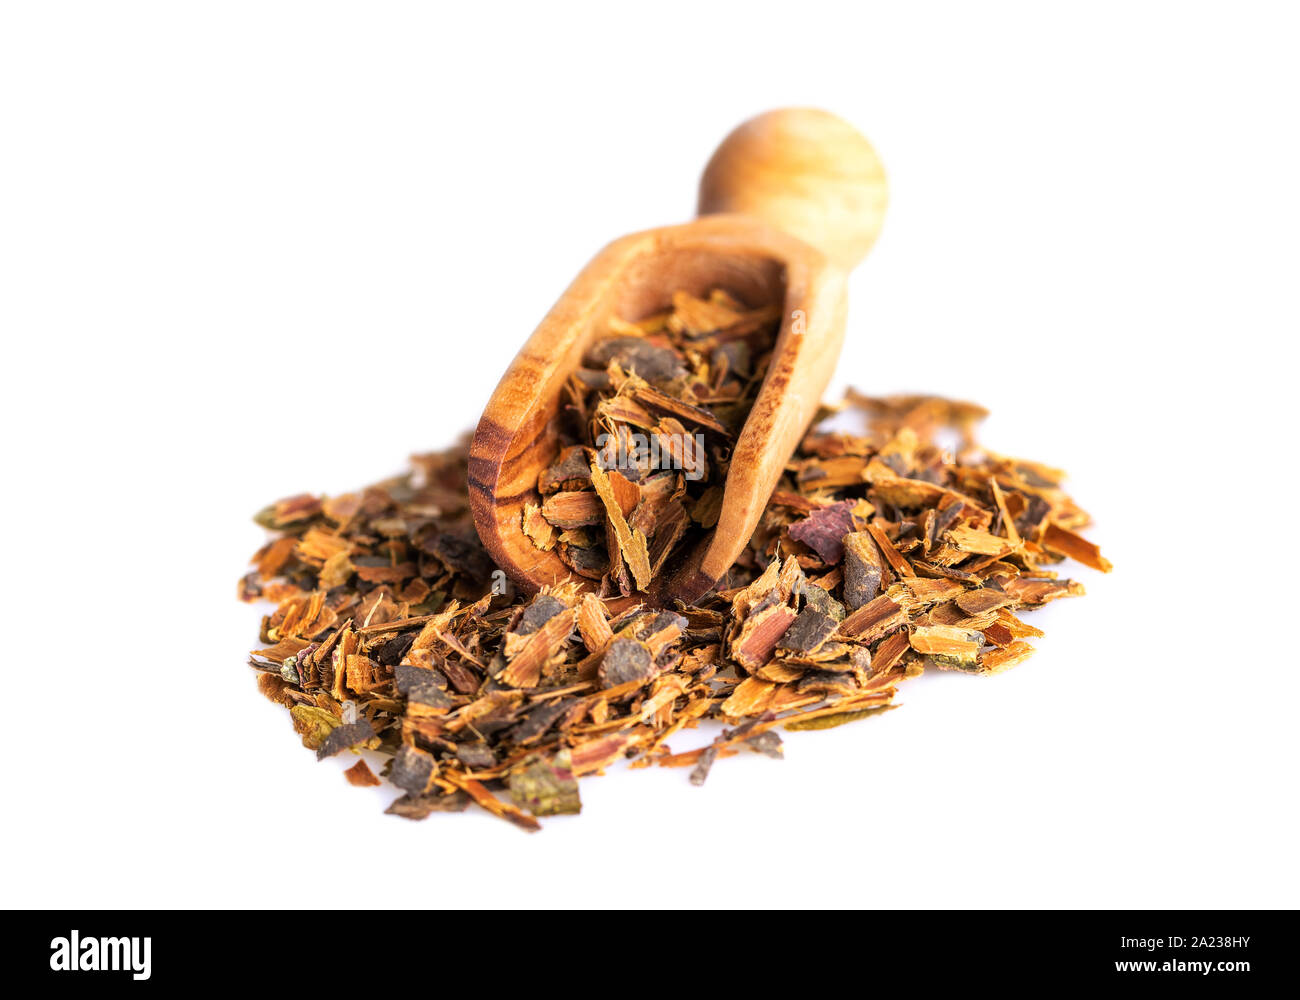 Alder buckthorn bark in wooden scoop. Buckthorn herbal tea is used as a laxative. Stock Photo